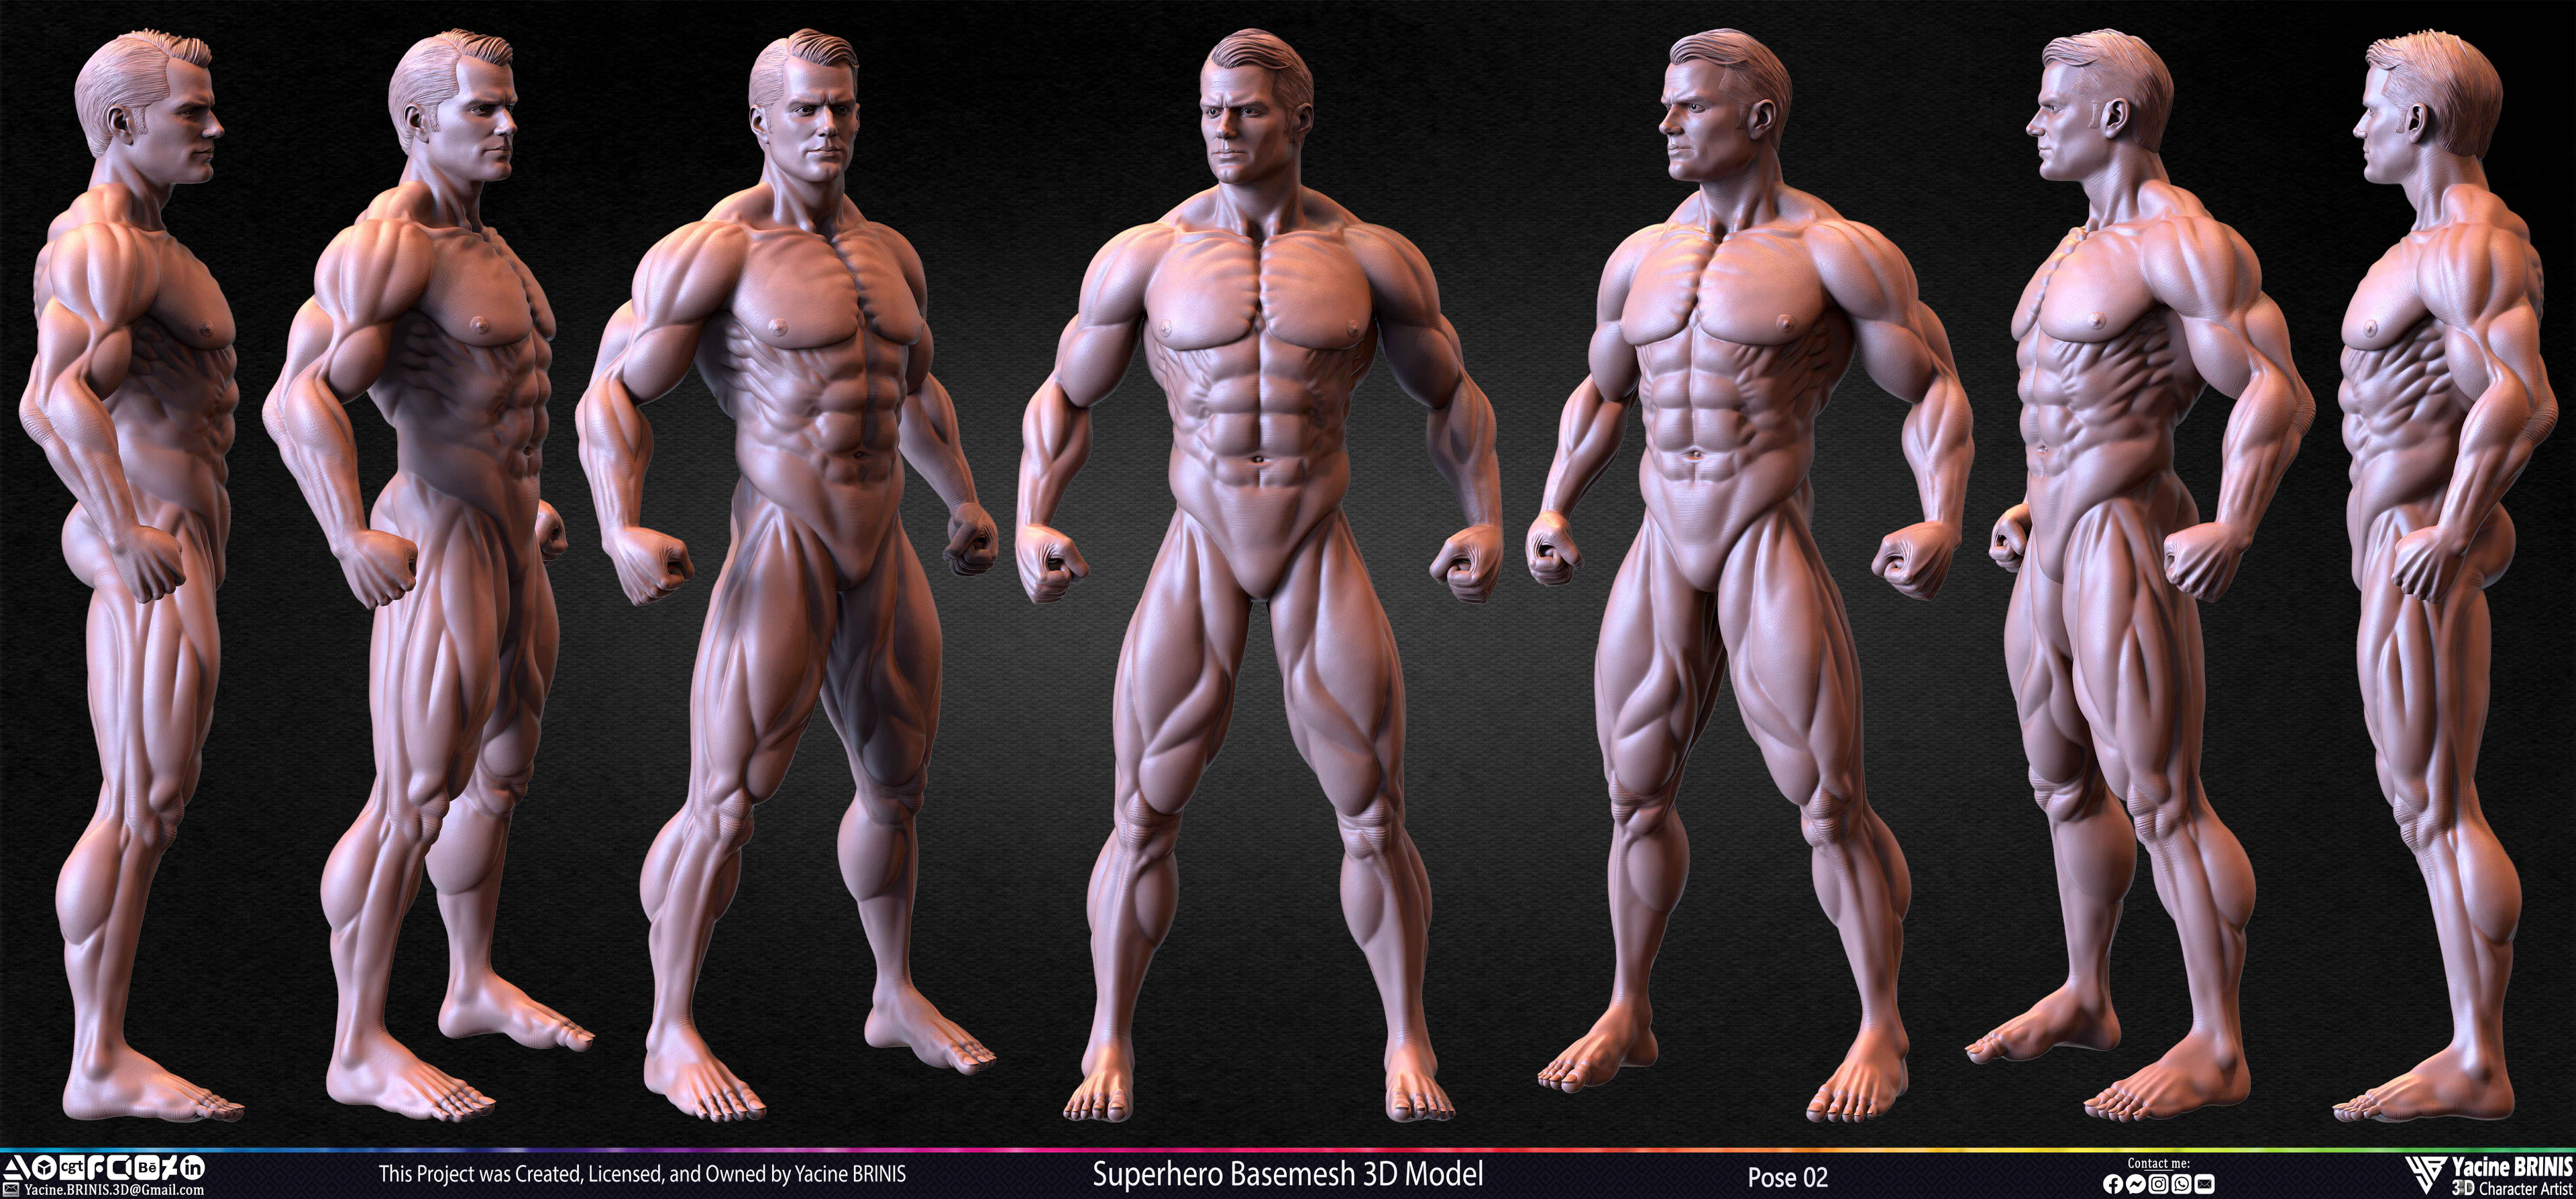 Super-Hero Basemesh 3D Model - Henry Cavill- Man of Steel - Superman - Pose 02 Sculpted by Yacine BRINIS Set 026